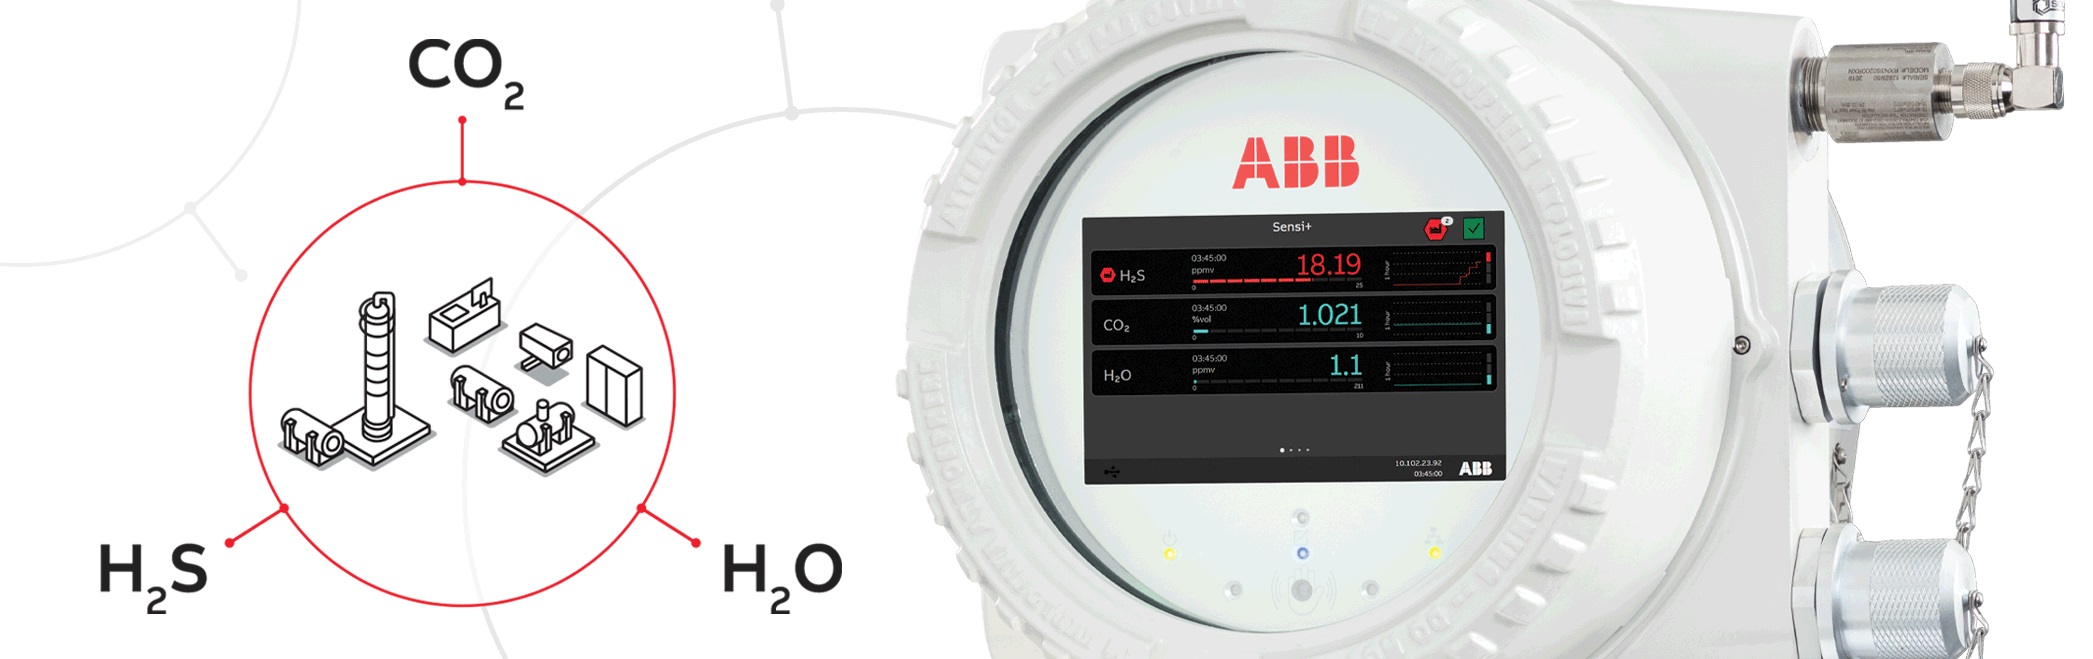 ABB single analyzer for multiple gas contaminants monitoring